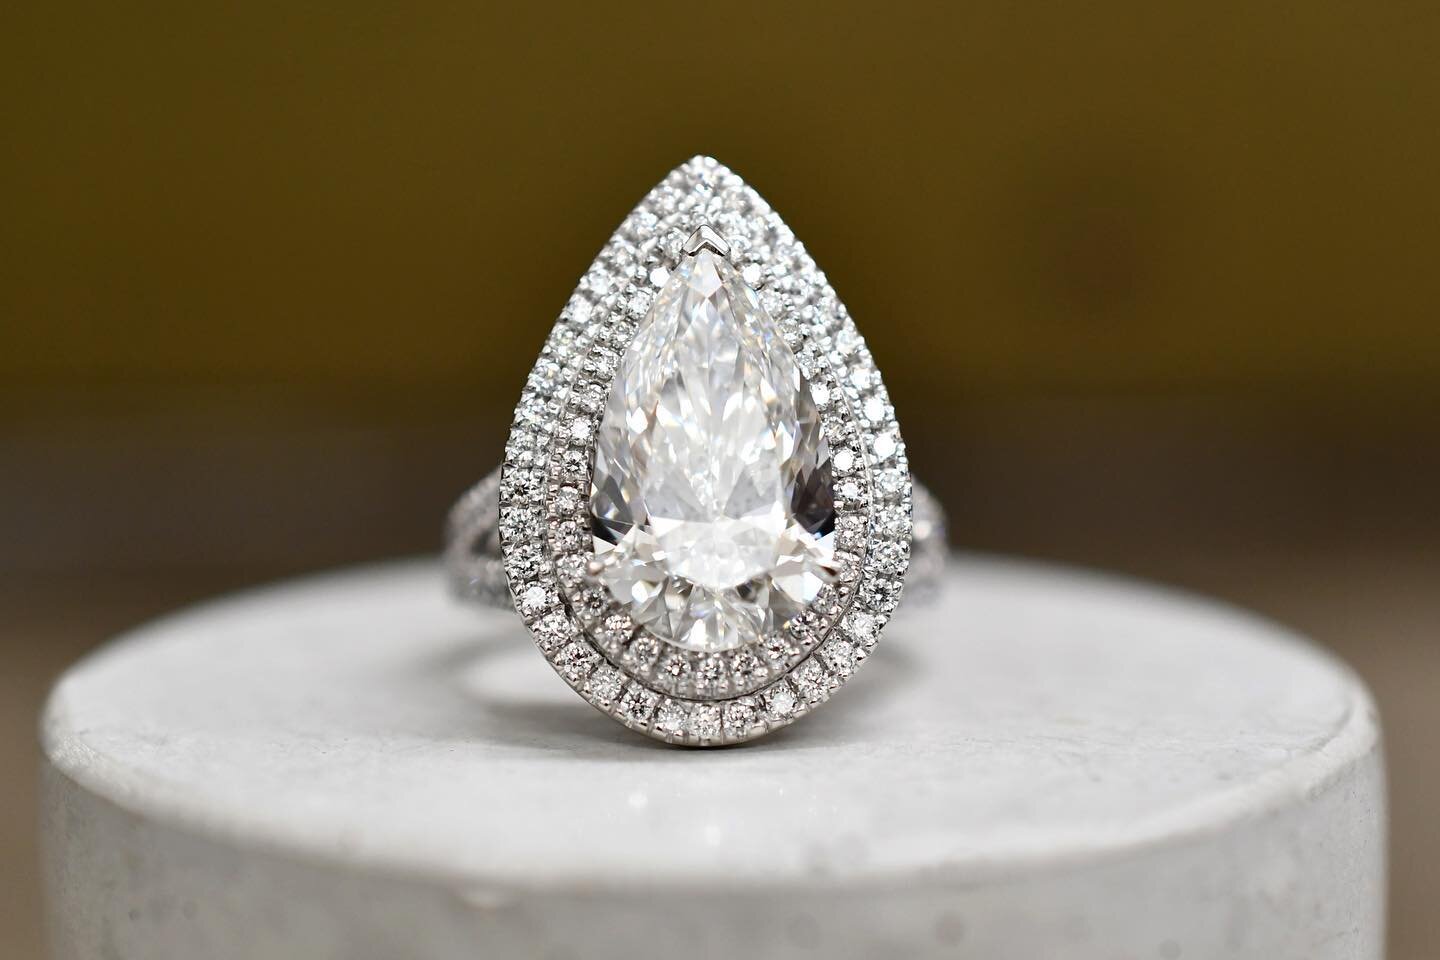 Beautiful lab pear halo ring 🤩

#jewellery#design#jewelry#handmade#bespoke#engagementring#diamonds#gold#finejewellery#fashion#style#london#photography#smallbusiness